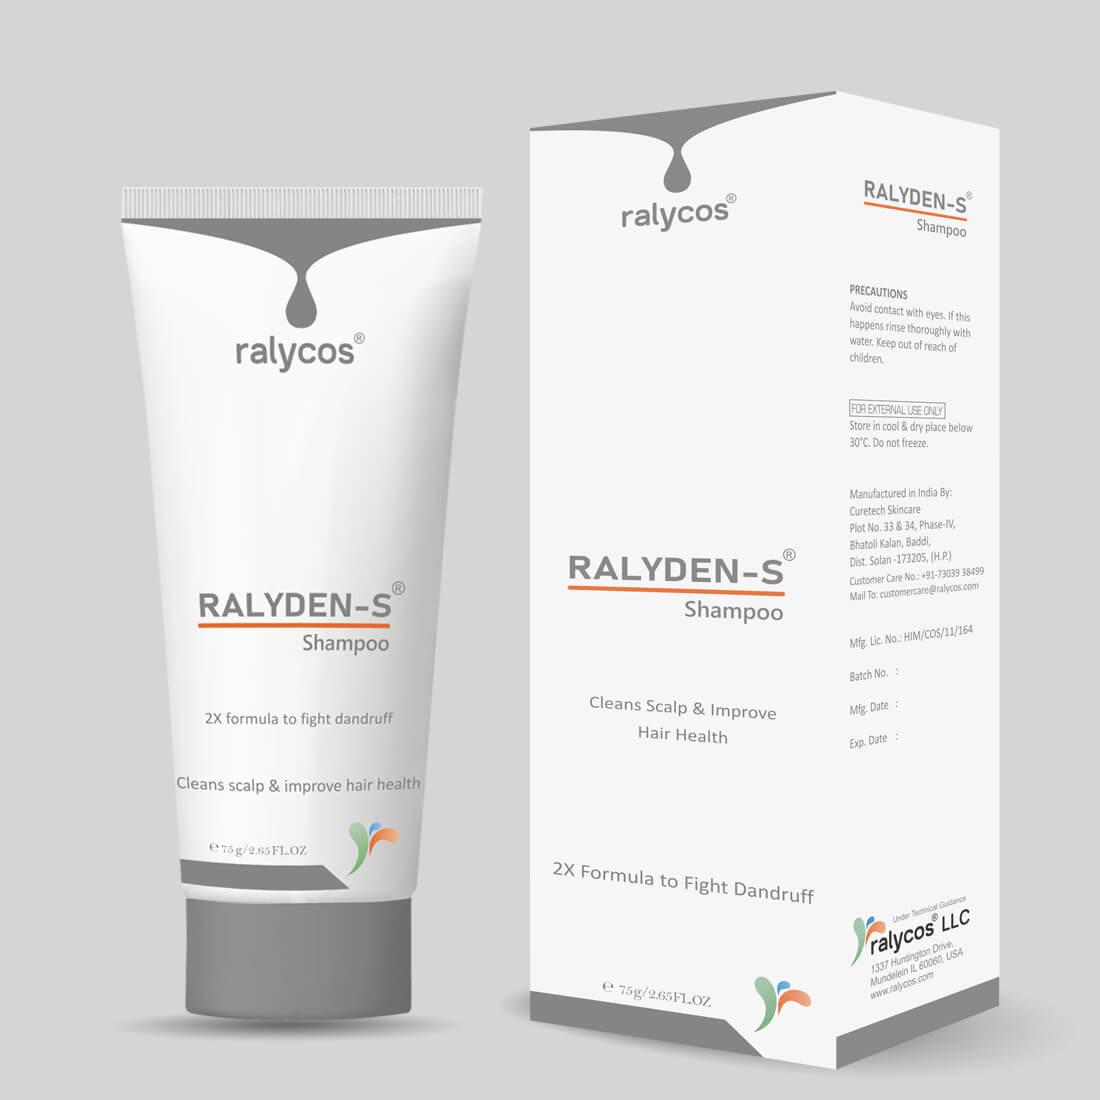 Ralycos Ralyden-S Shampoo 75Gm